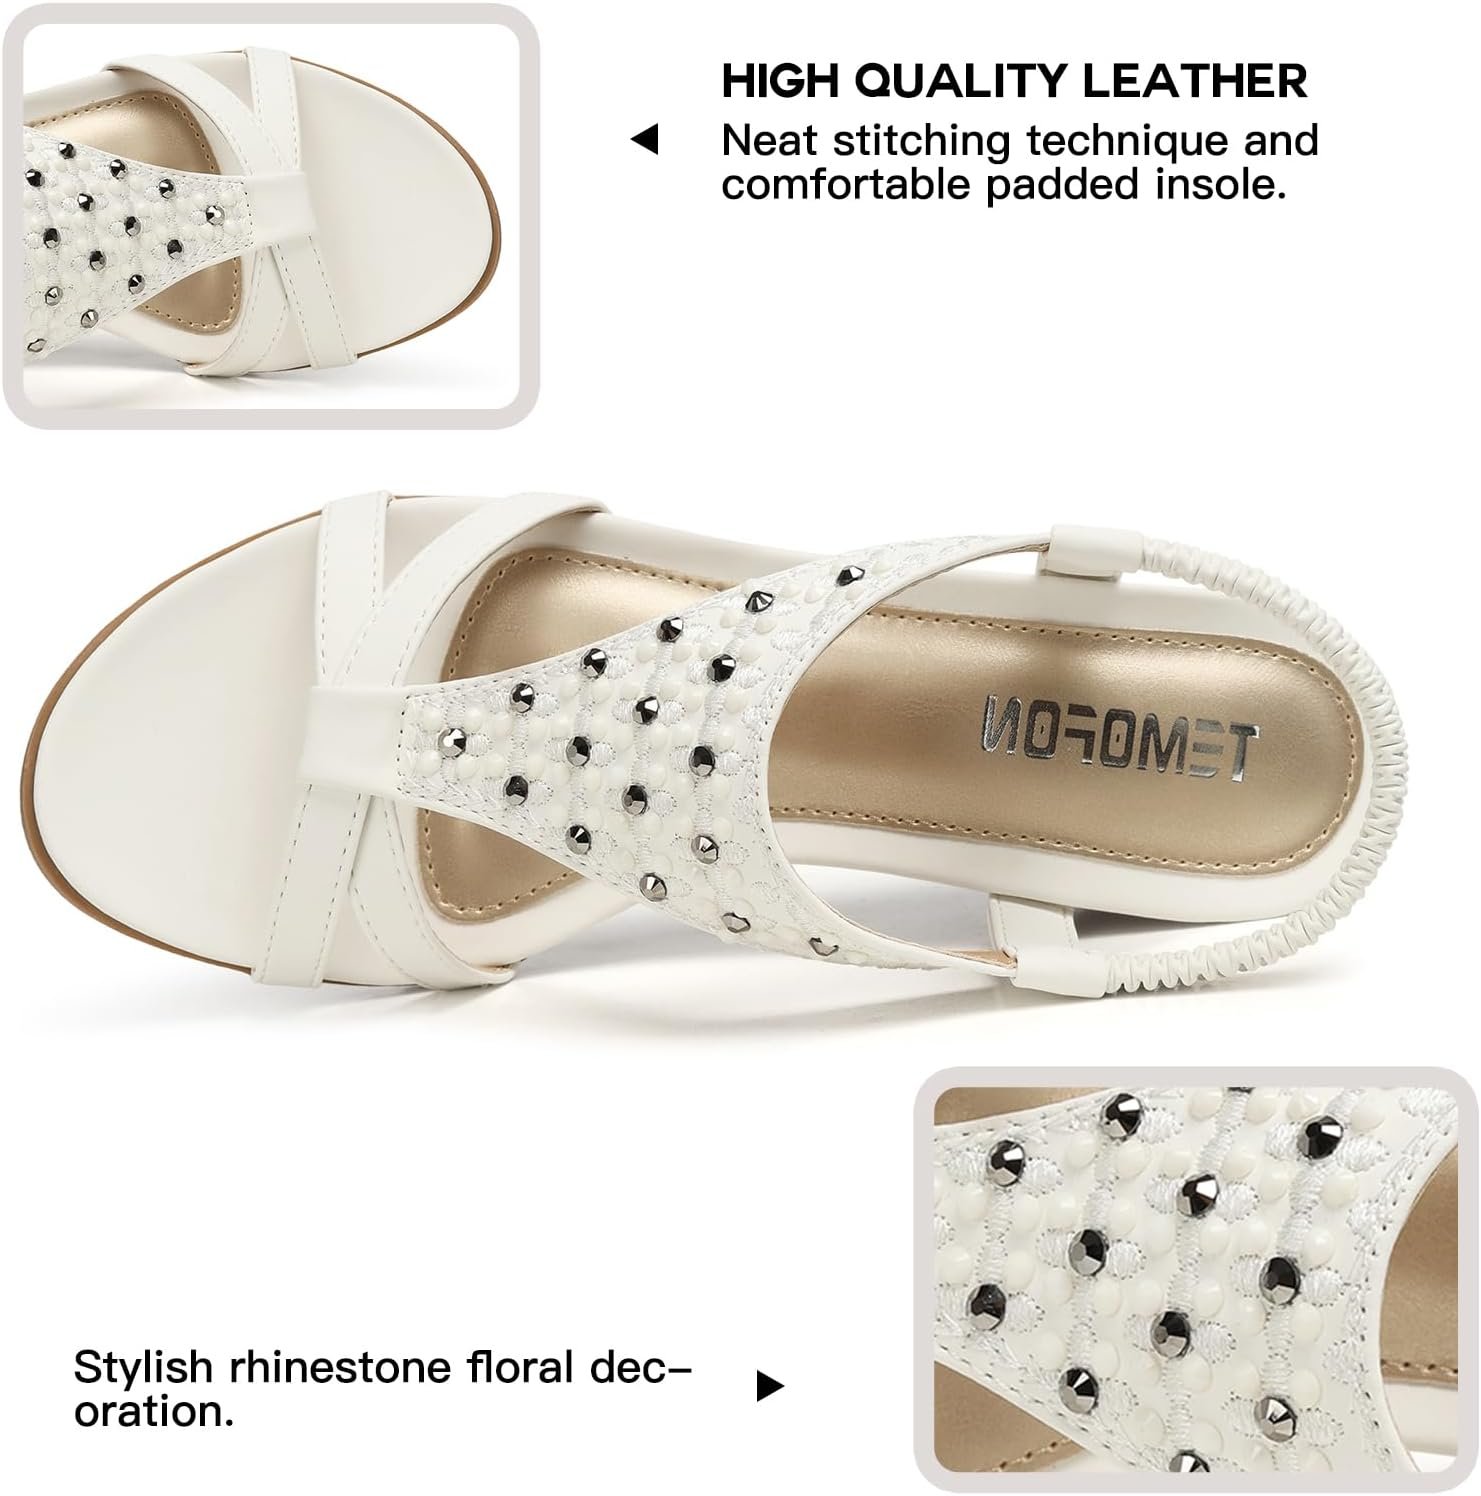 TEMOFON Womens Sandals Wedge Low: Summer Open Toe Wedges - Dressy Casual Elastic Ankle Strap Platform - Comfortable Rhinestone Flower Sandals